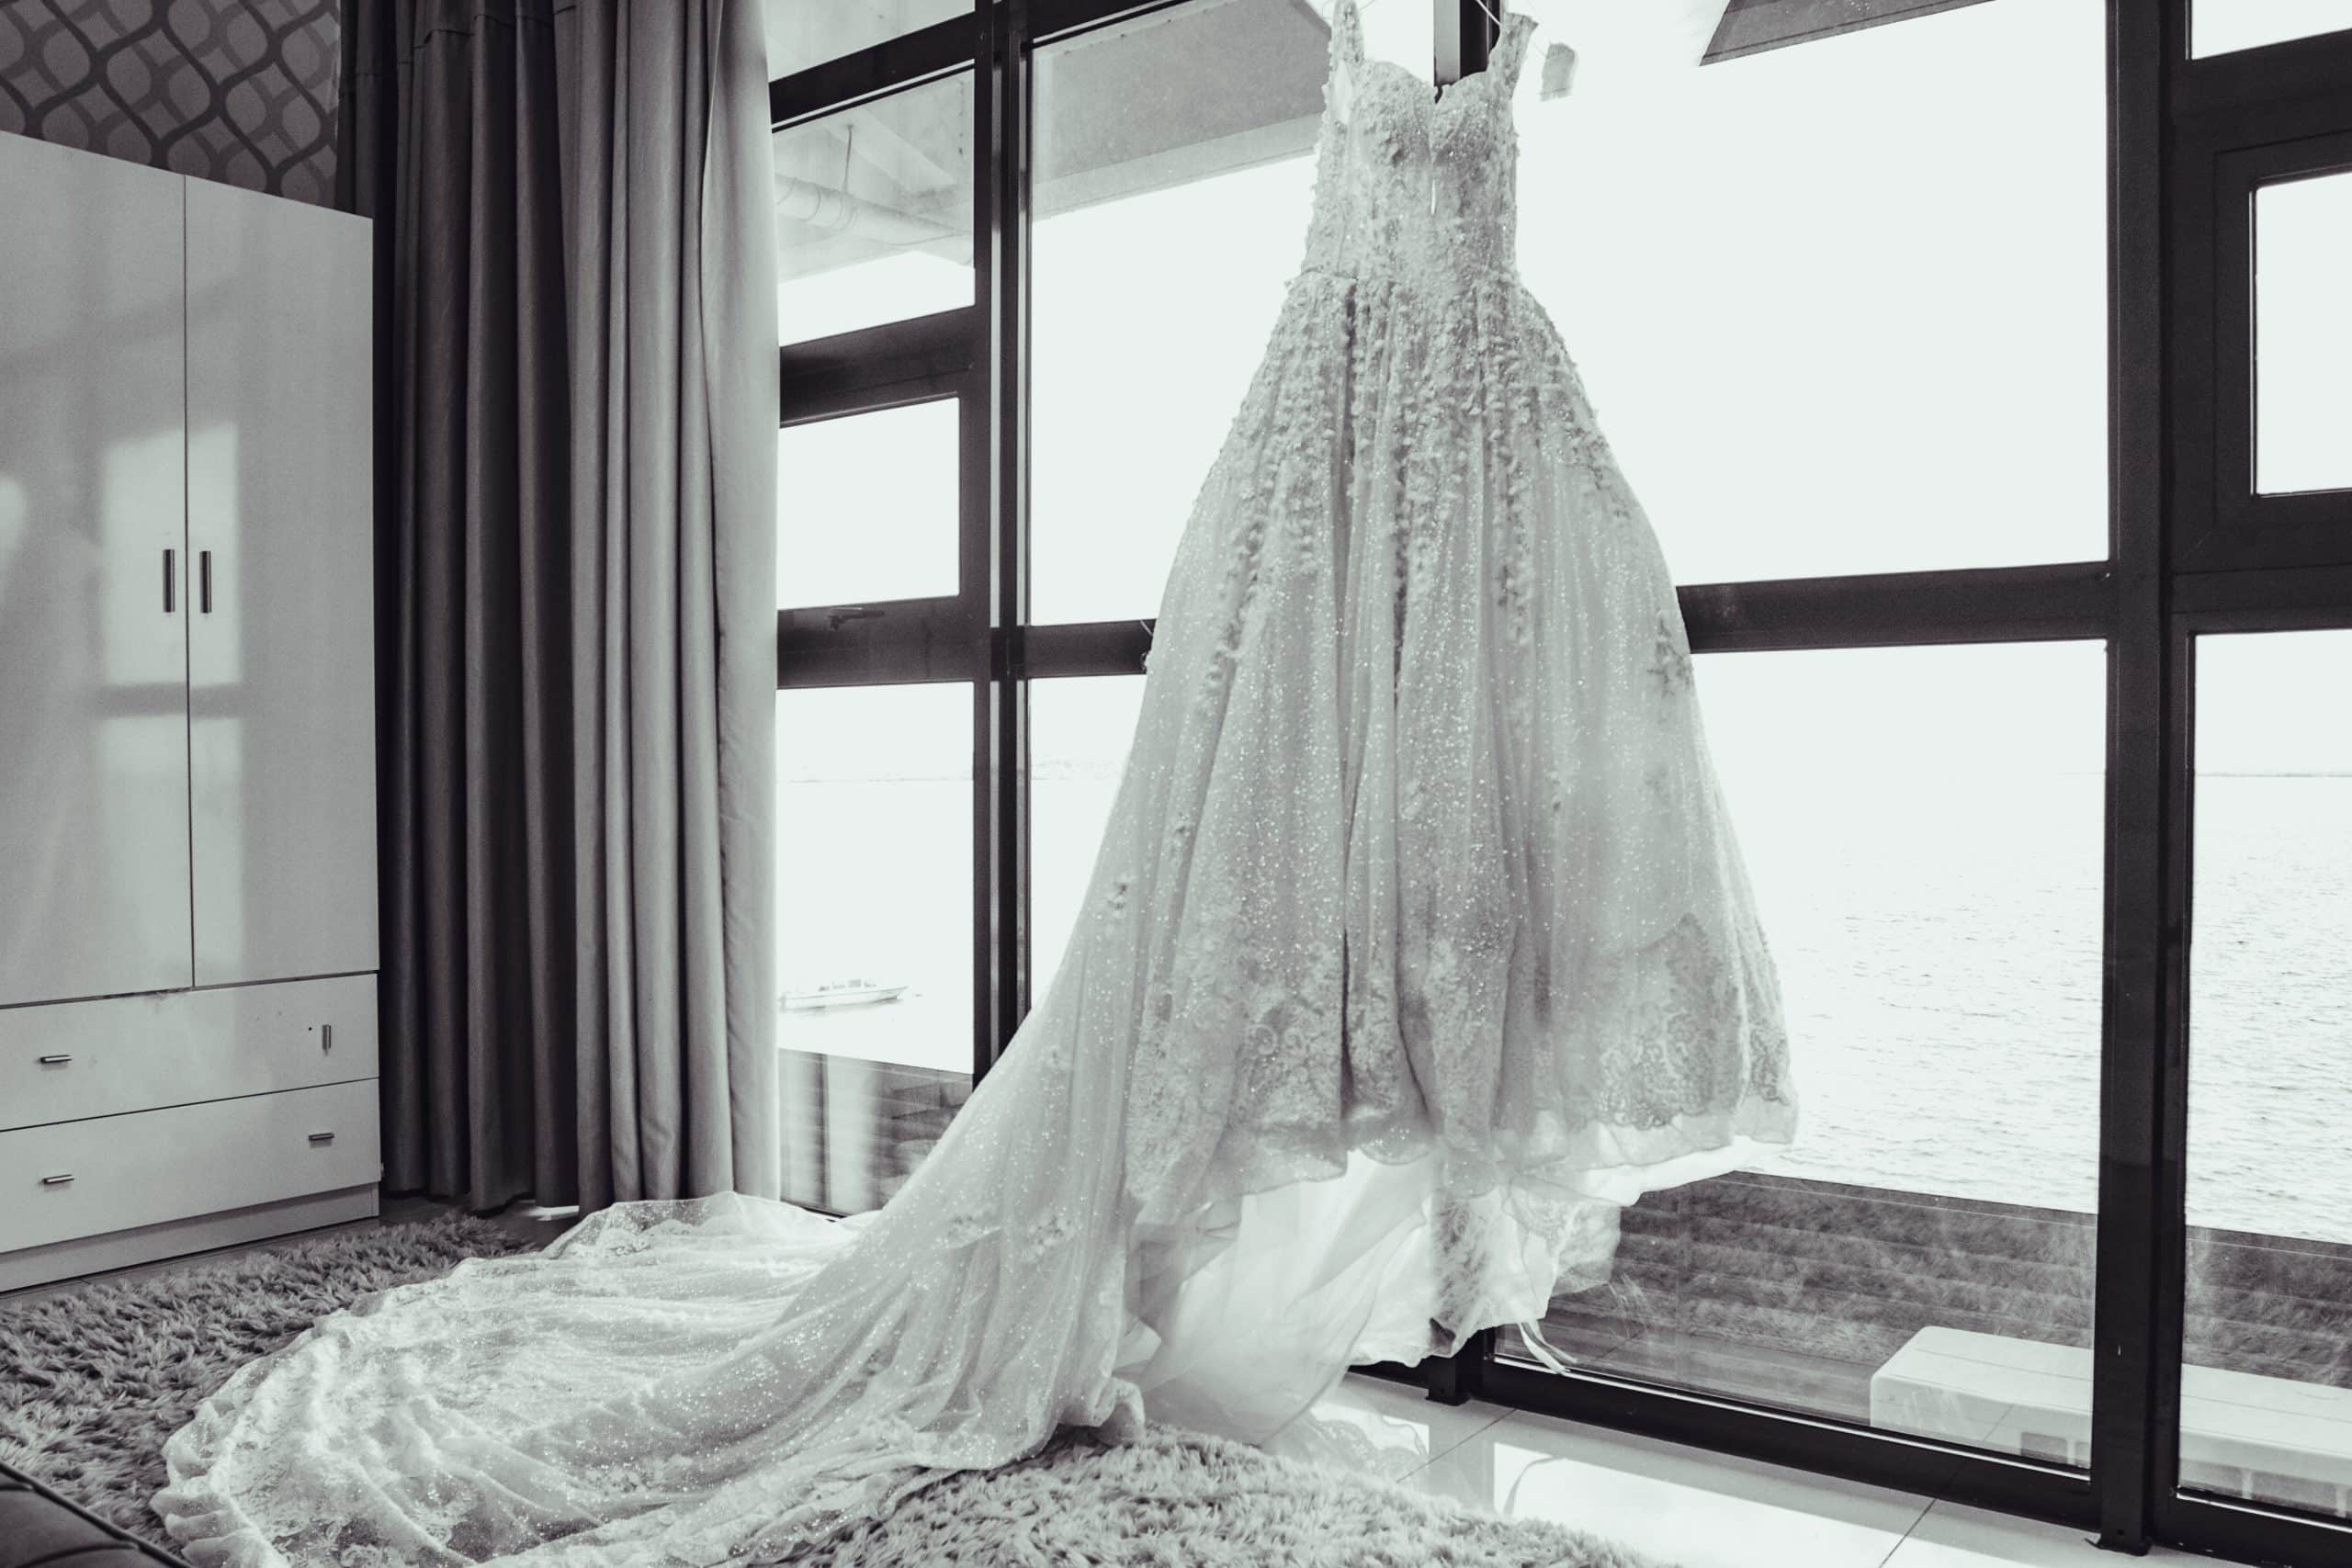 Grayscale photo of a white wedding dress on a window